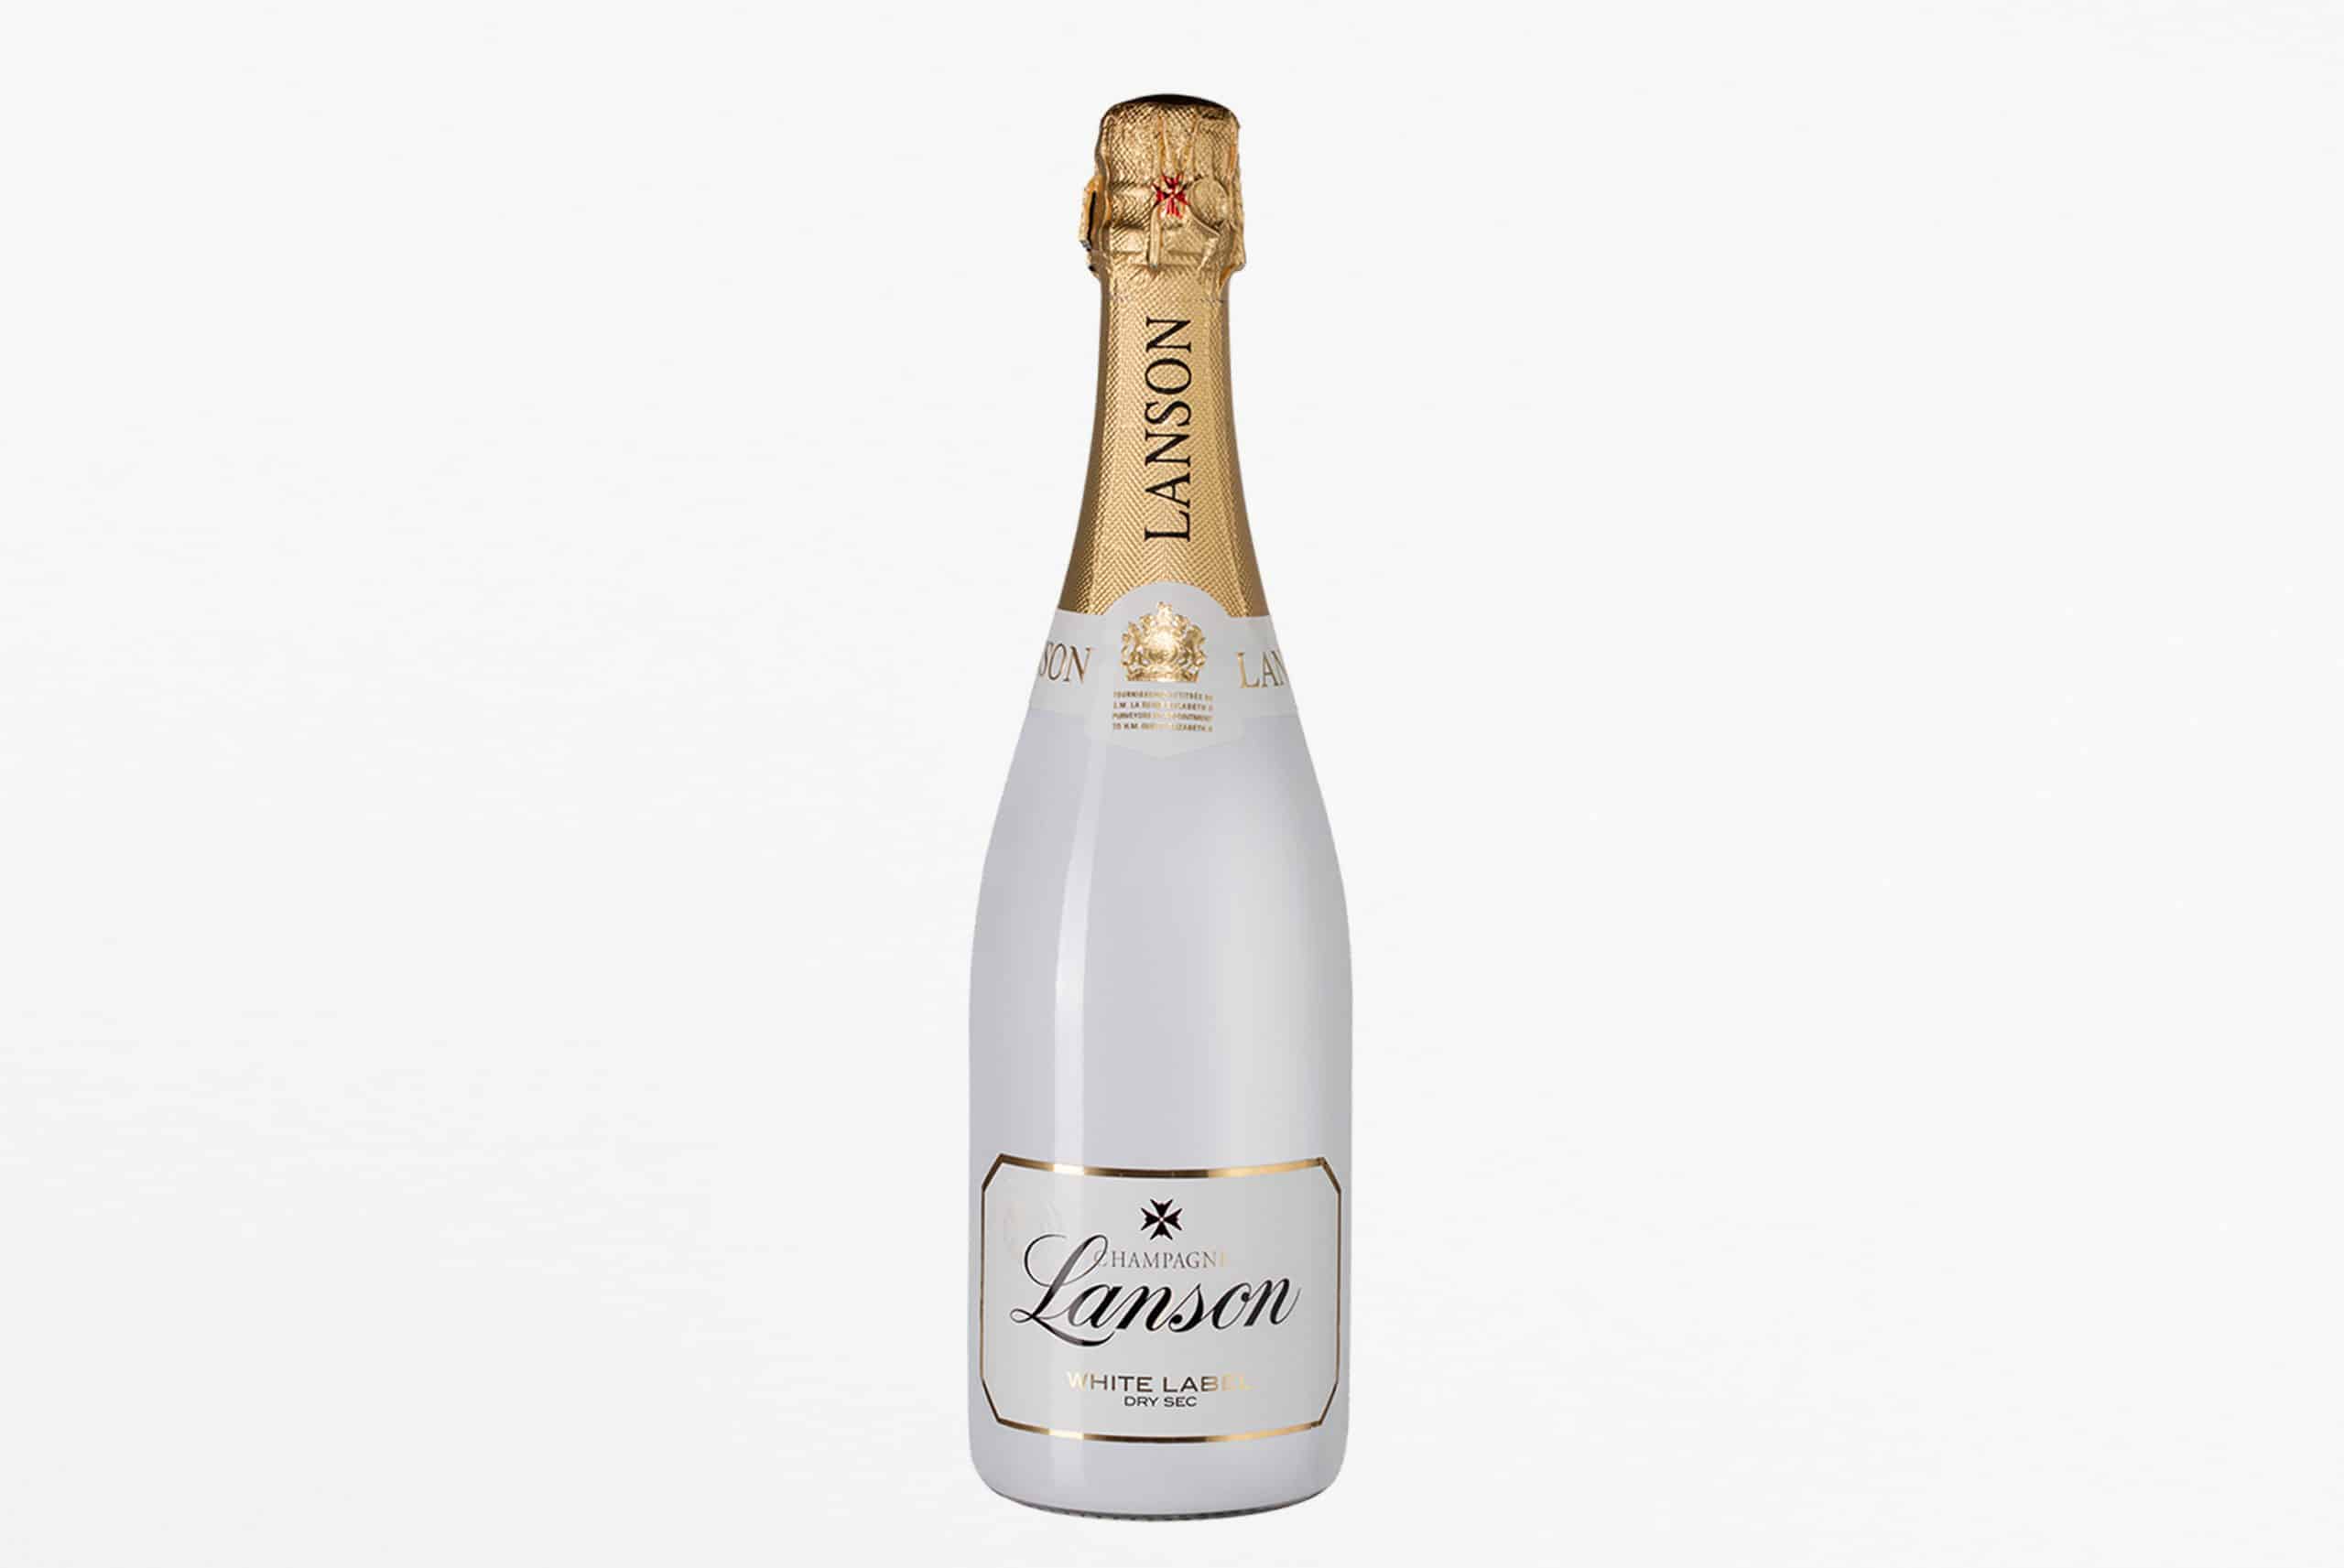 white champagne bottle